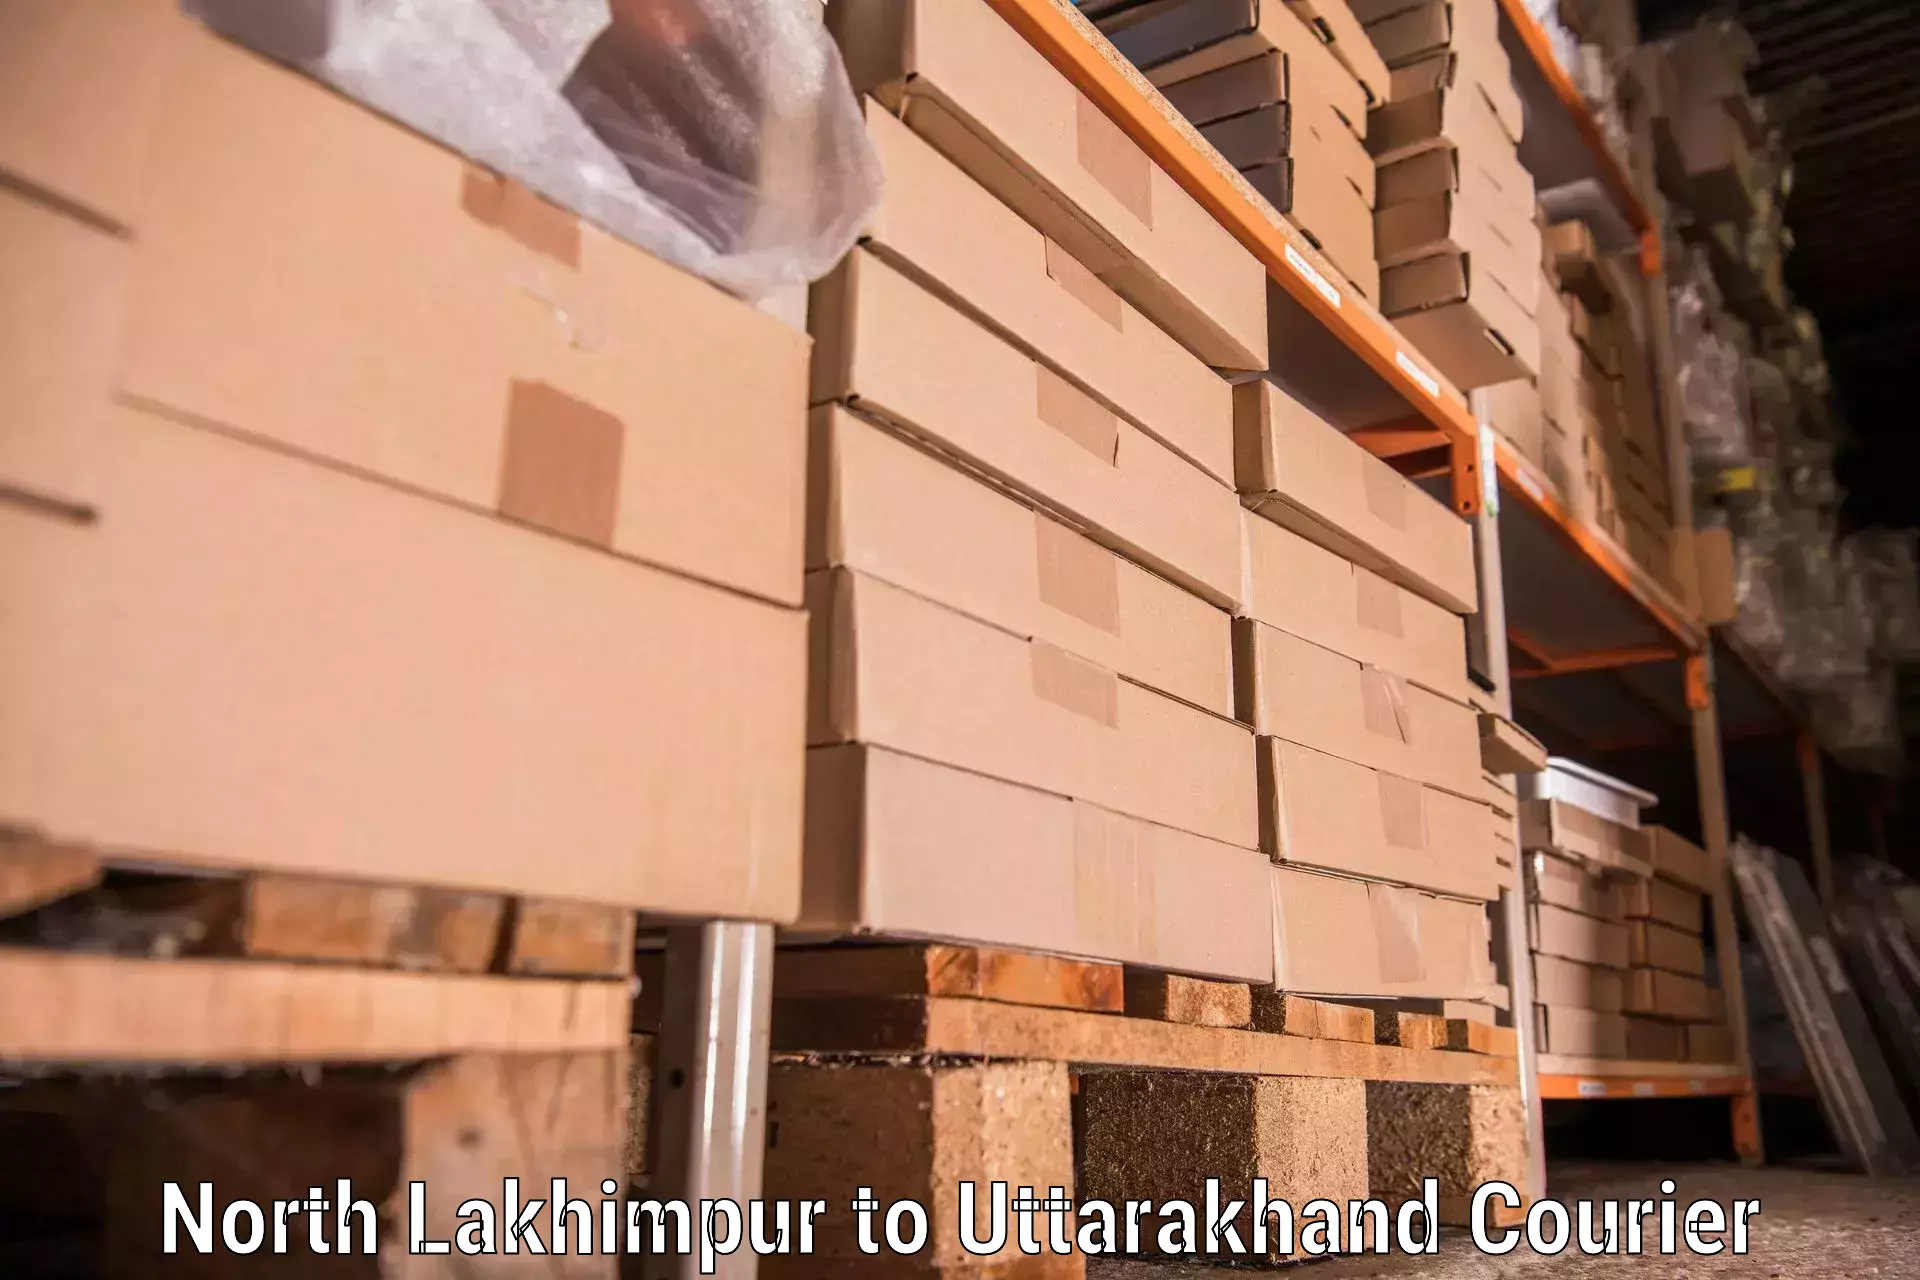 Professional moving company North Lakhimpur to Tehri Garhwal